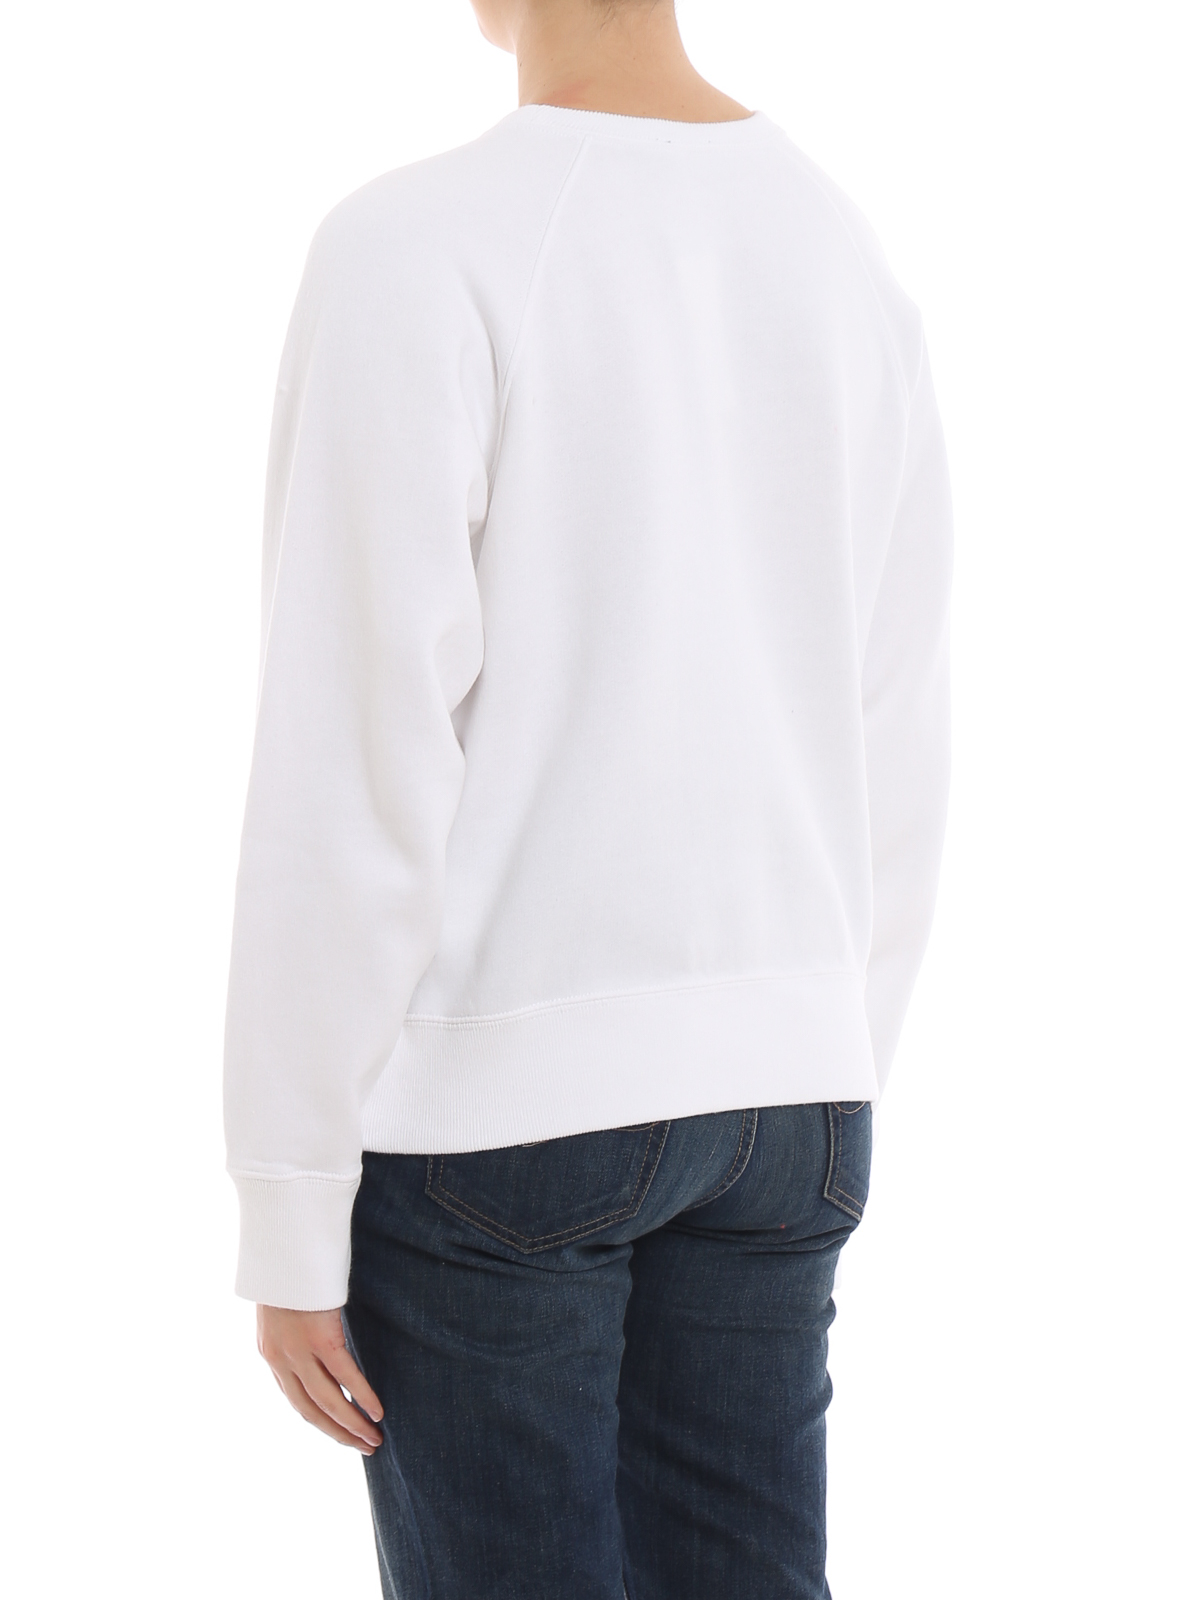 Sweatshirts & Sweaters Polo Ralph Lauren - Crew neck white sweatshirt ...